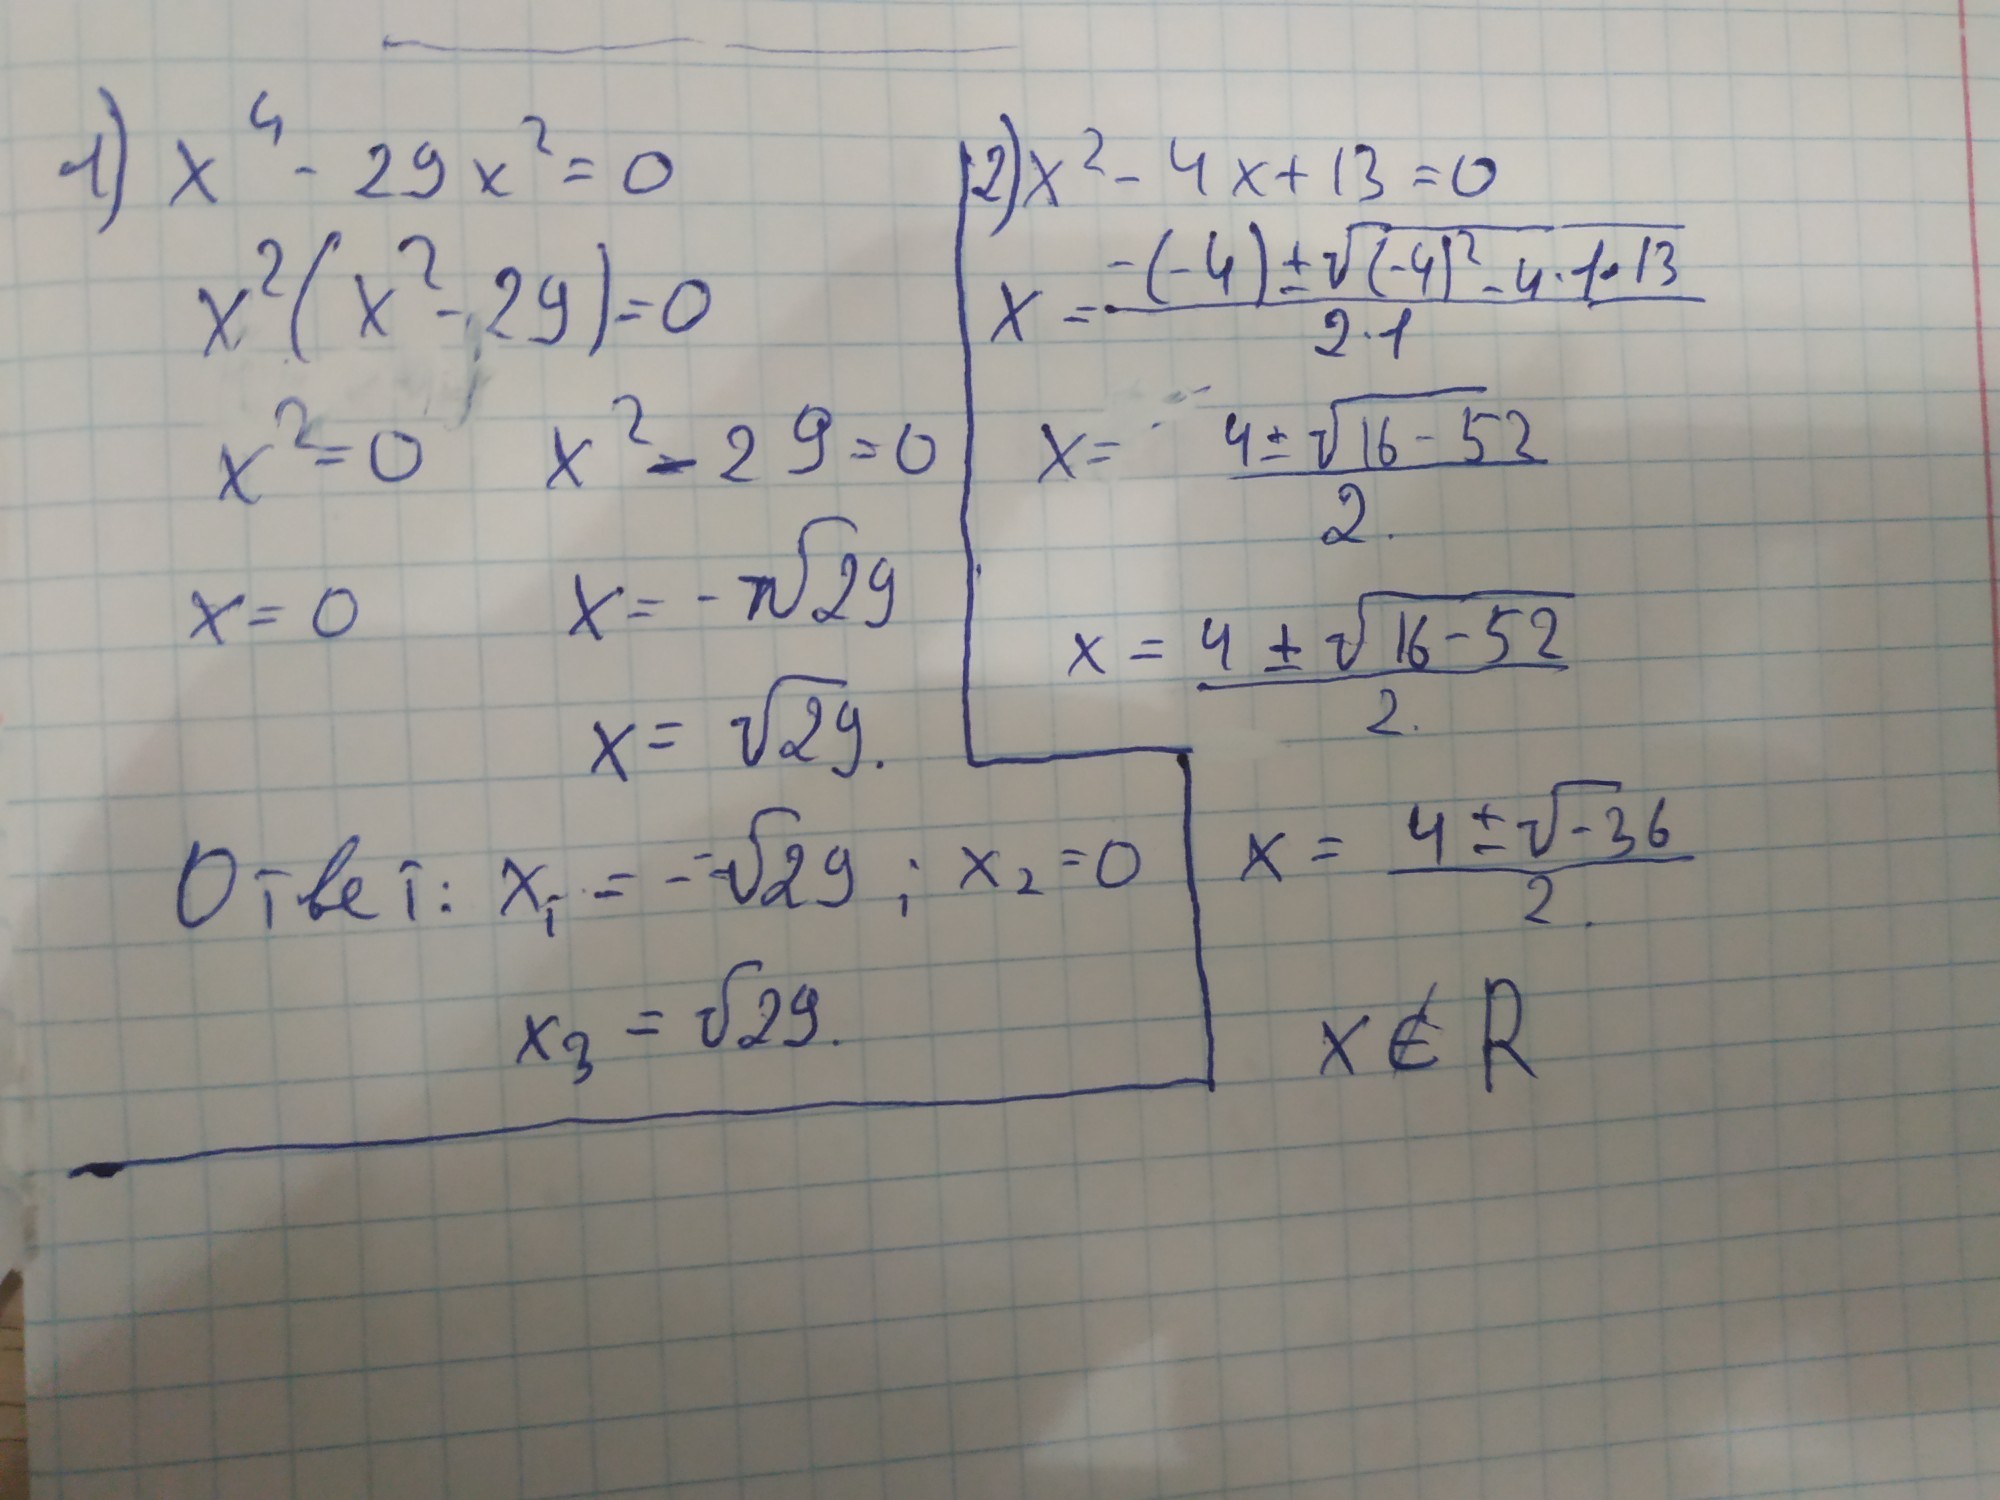 29 x 10 x 3 3. X2 – 4x + 13 = 0 комплексные. (X + 4)*(X - 13)^2 <= 0. X2 4x 13 0 комплексные числа решение. X2-2,4x-13=0.